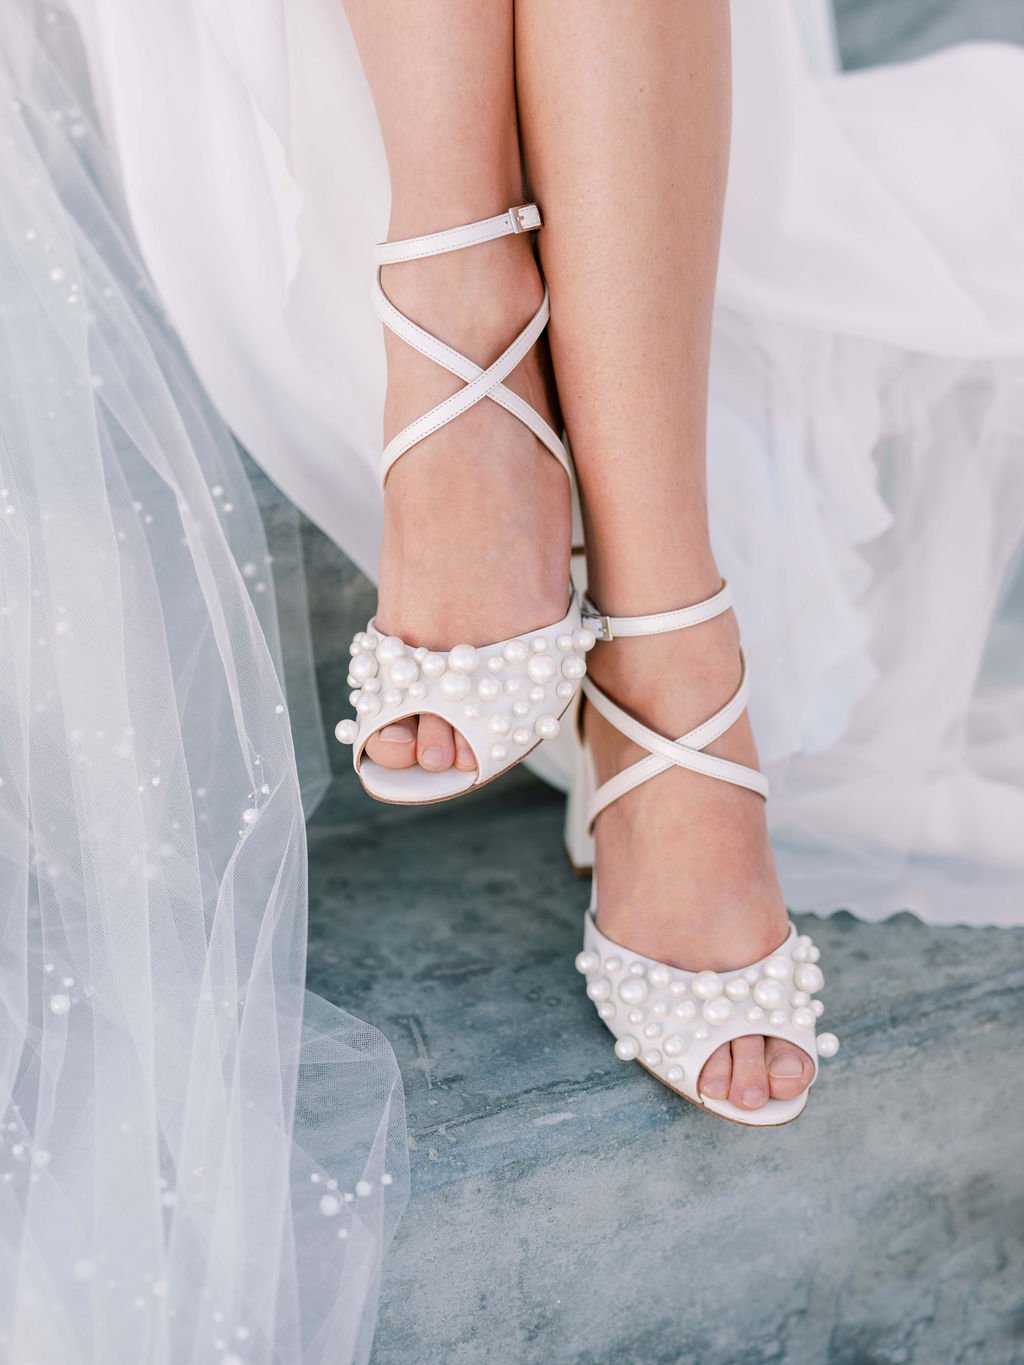 Bridal Shoes close up